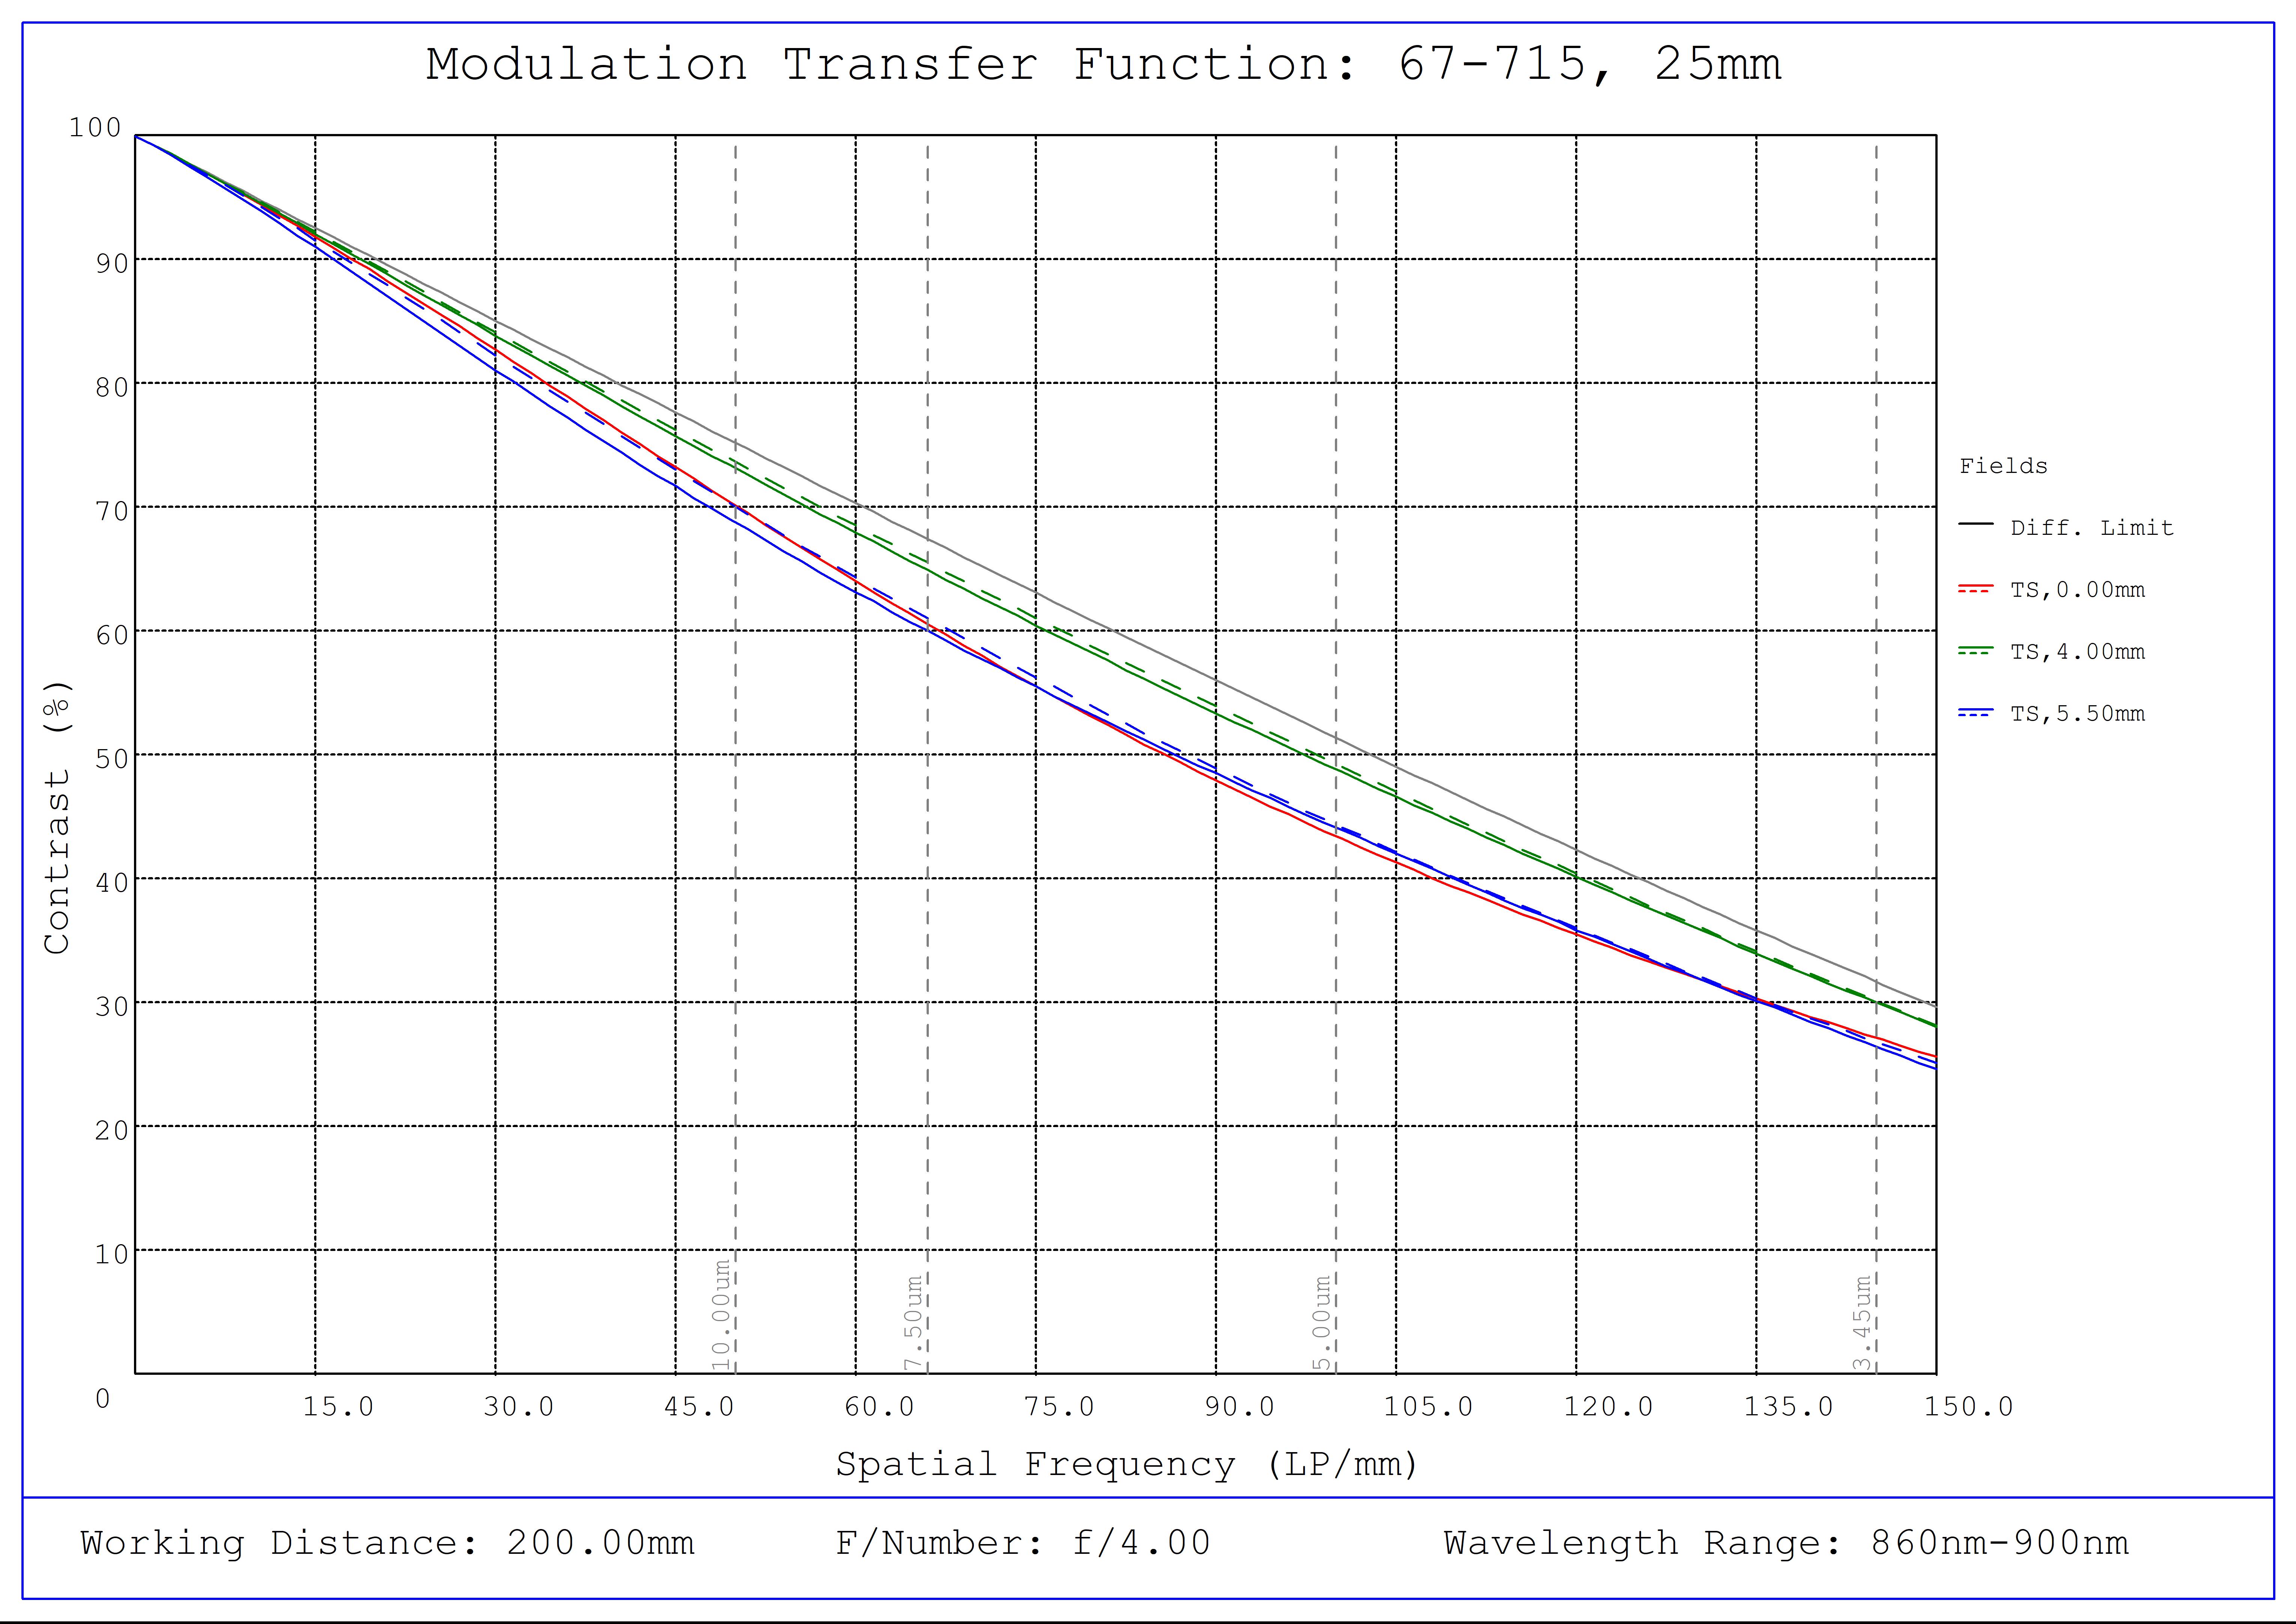 #67-715, 25mm C VIS-NIR Series Fixed Focal Length Lens, Modulated Transfer Function (MTF) Plot (NIR), 200mm Working Distance, f4